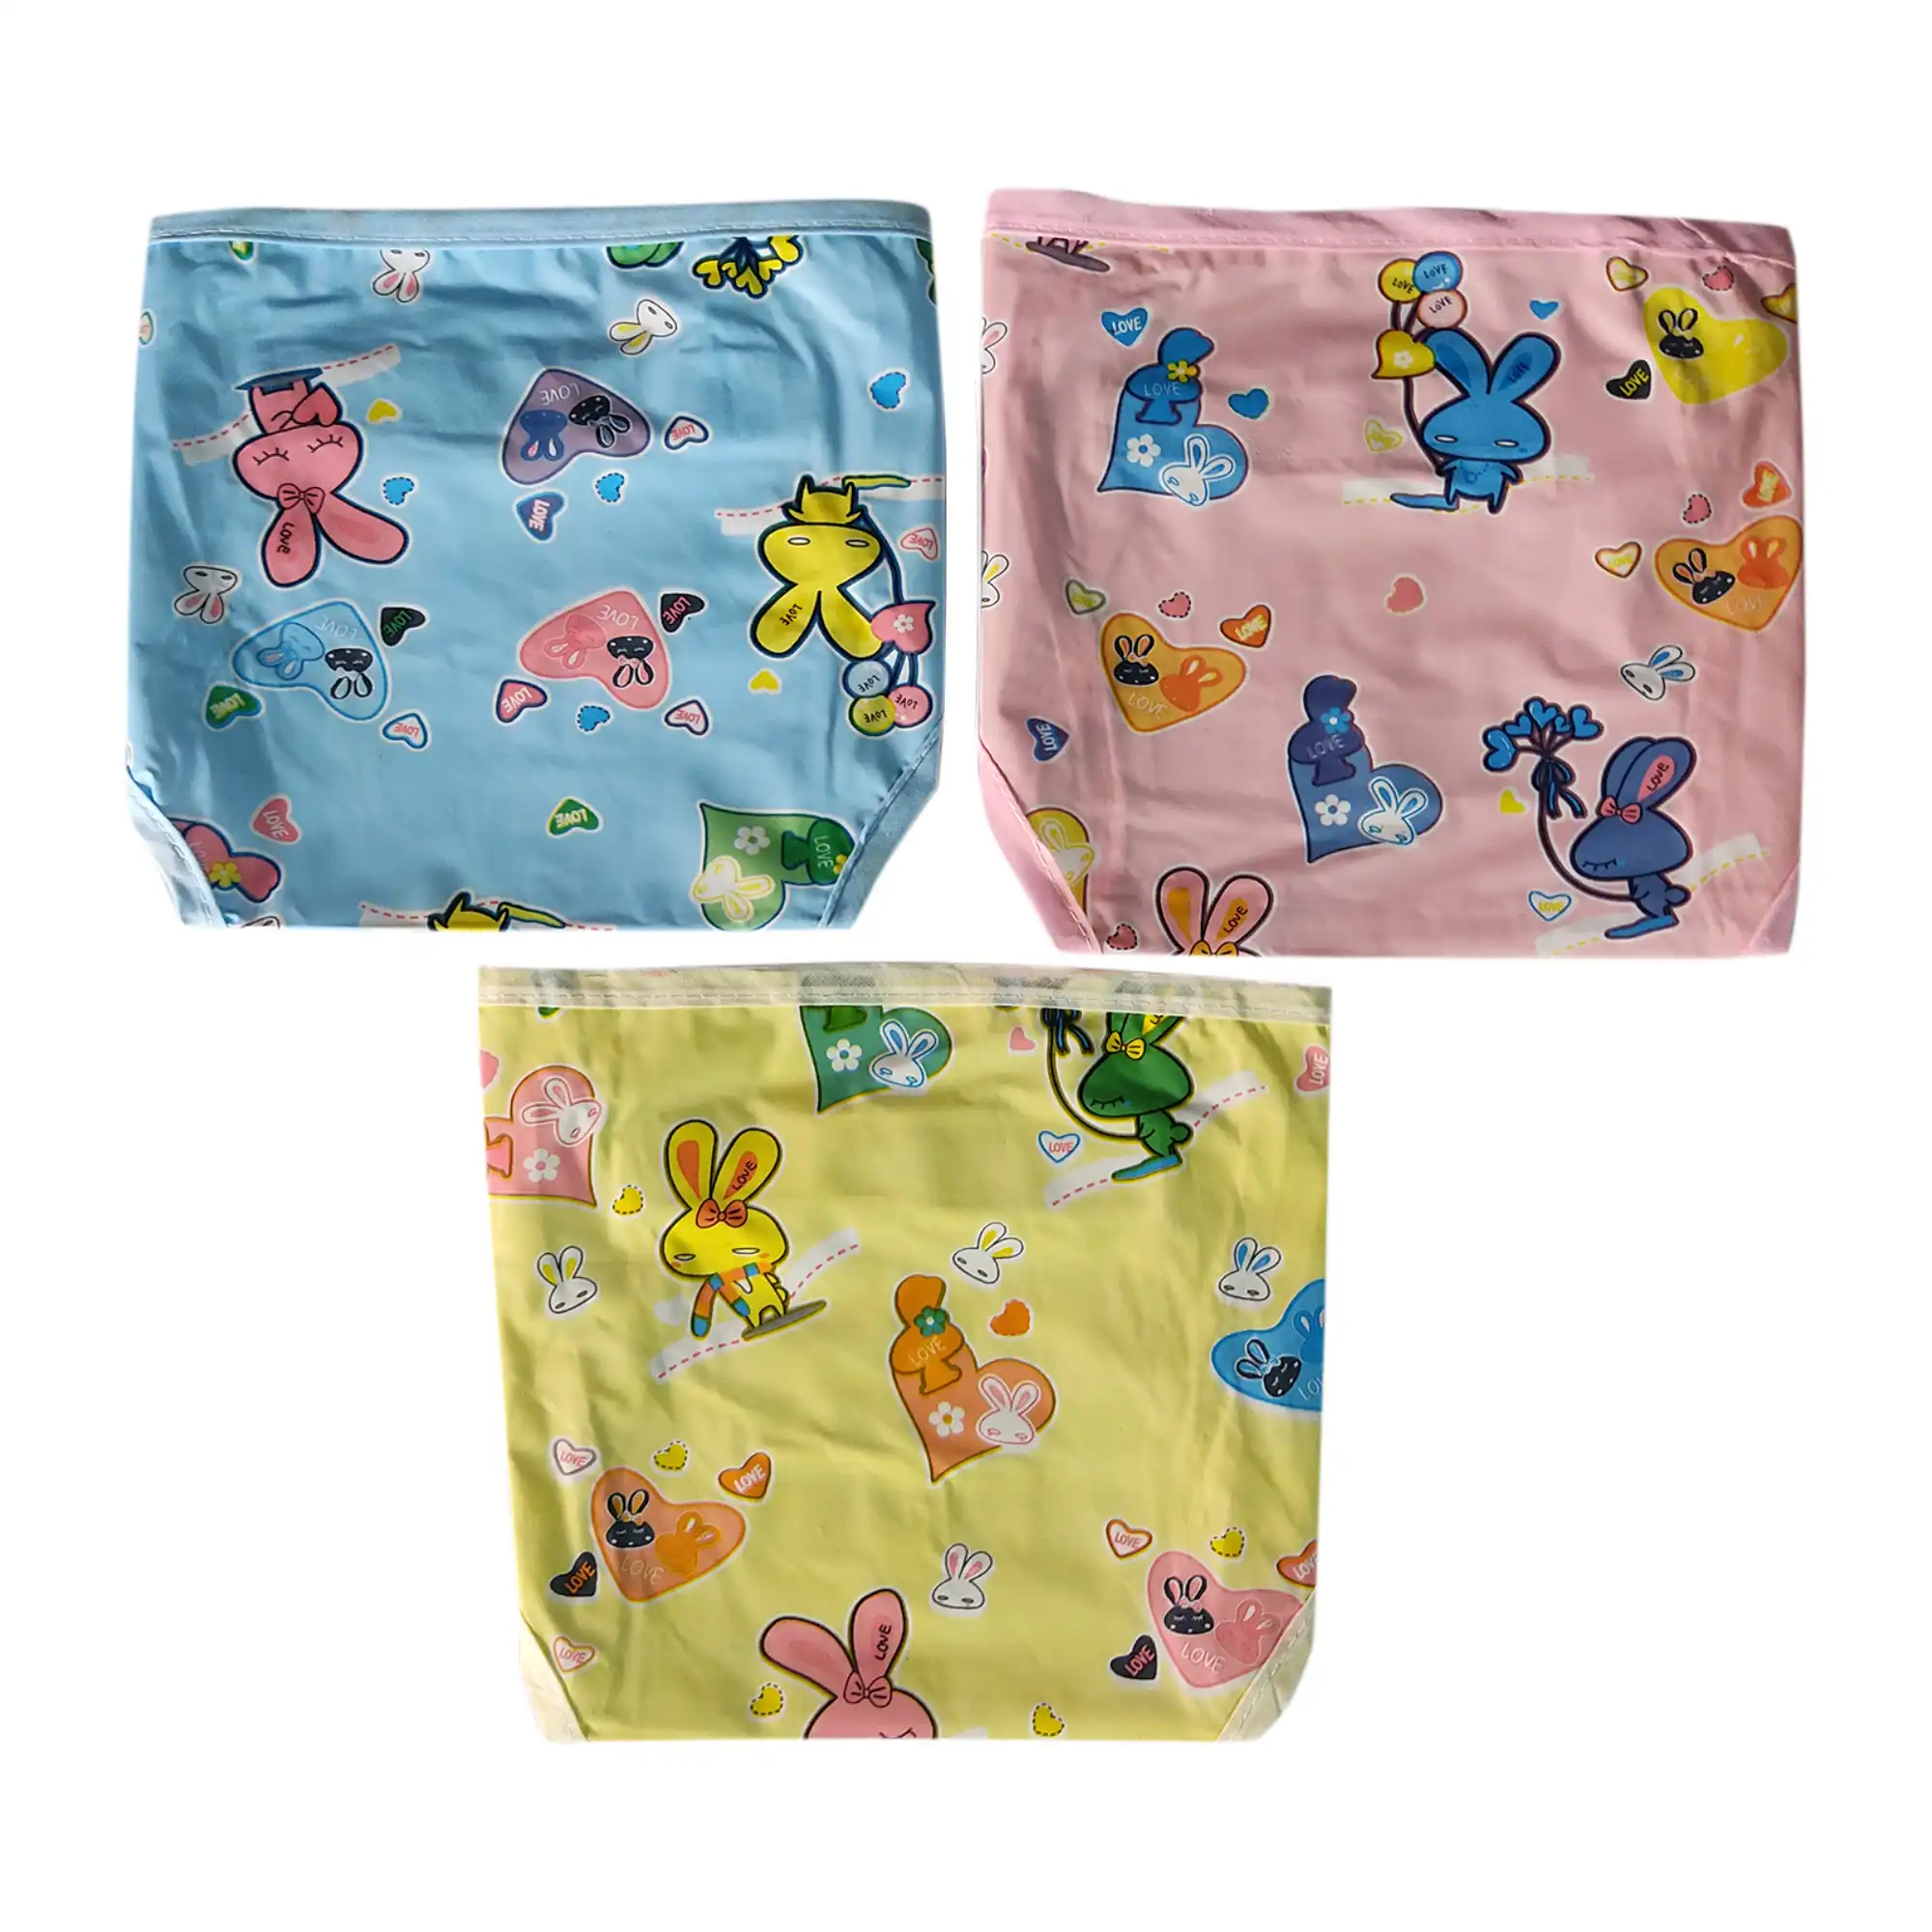 Newborn Plastic Baby Diapers Set of 3 3